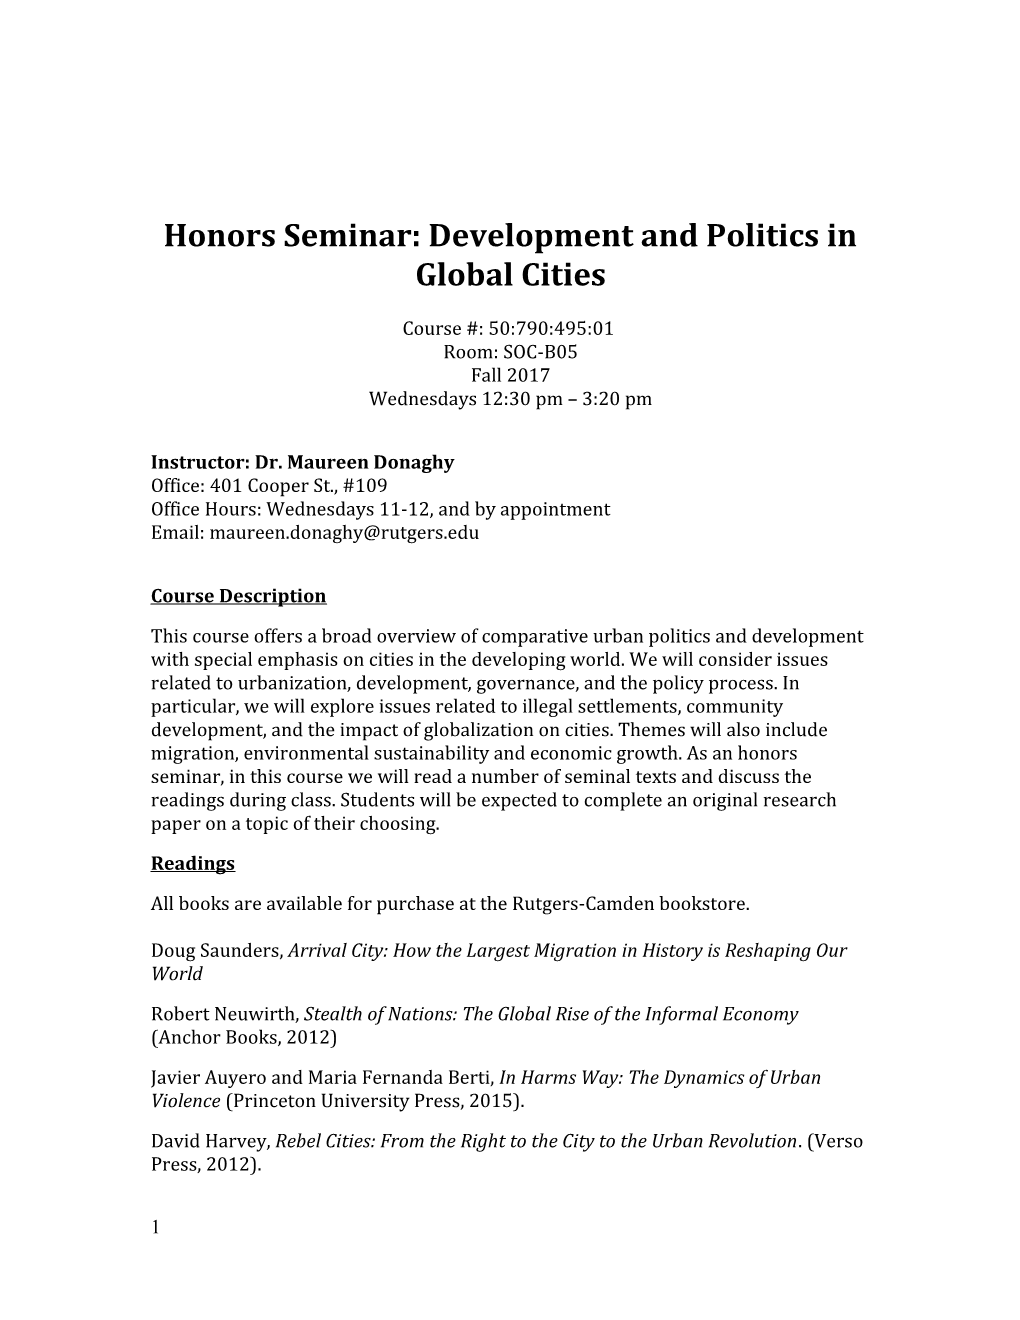 Honors Seminar: Development and Politics in Global Cities